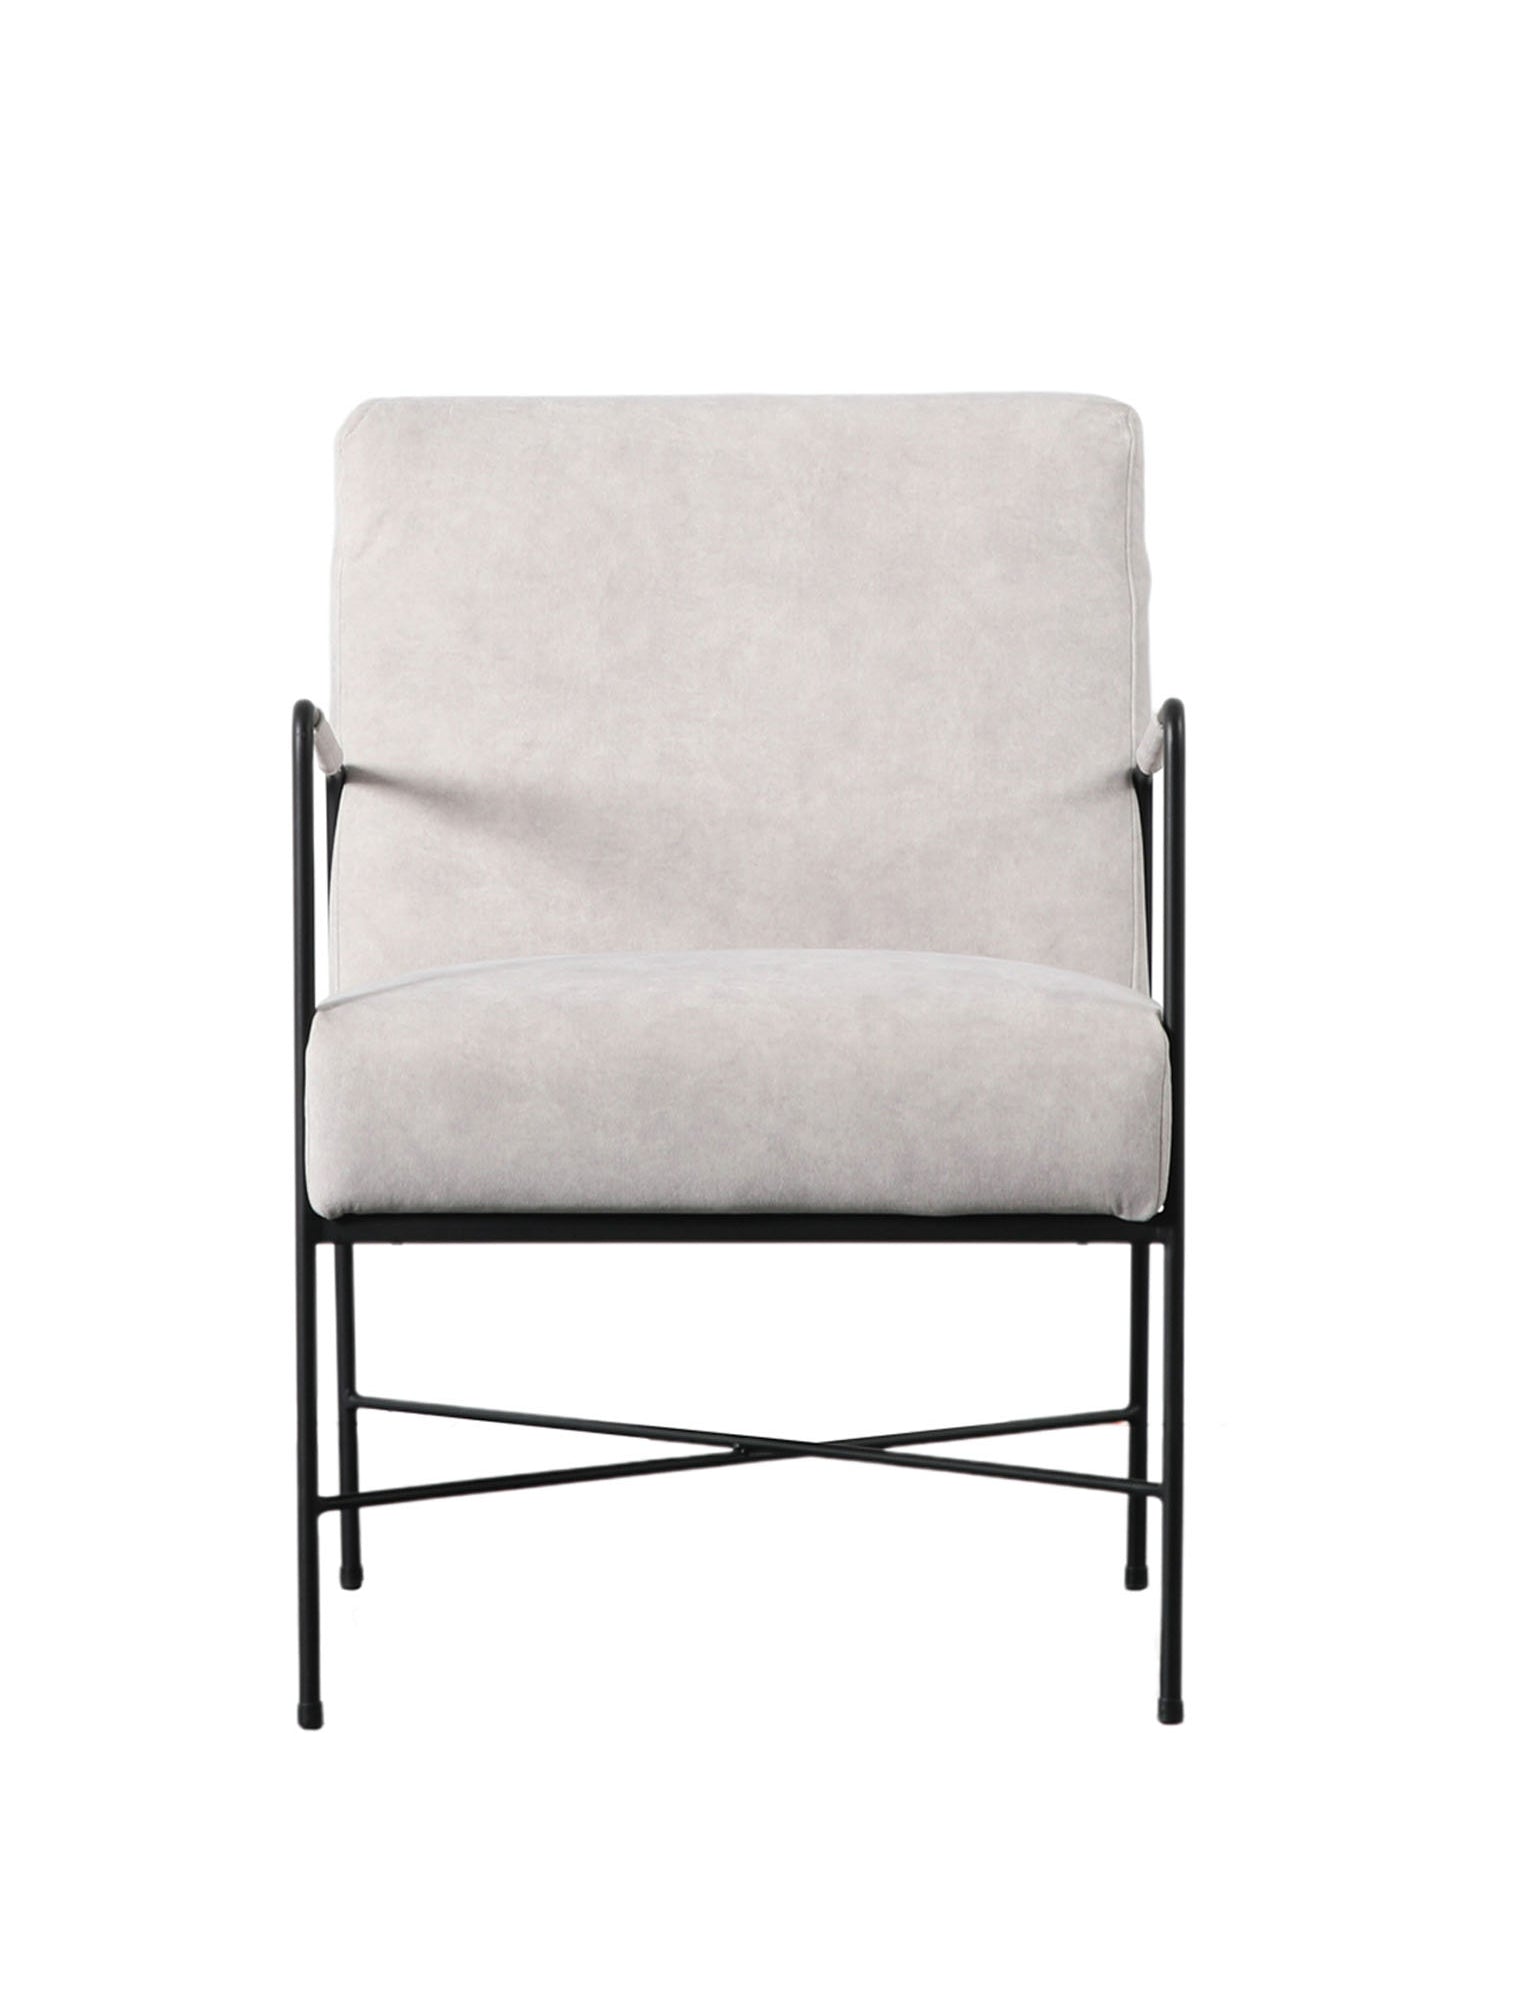 white fabric, metal frame armchair